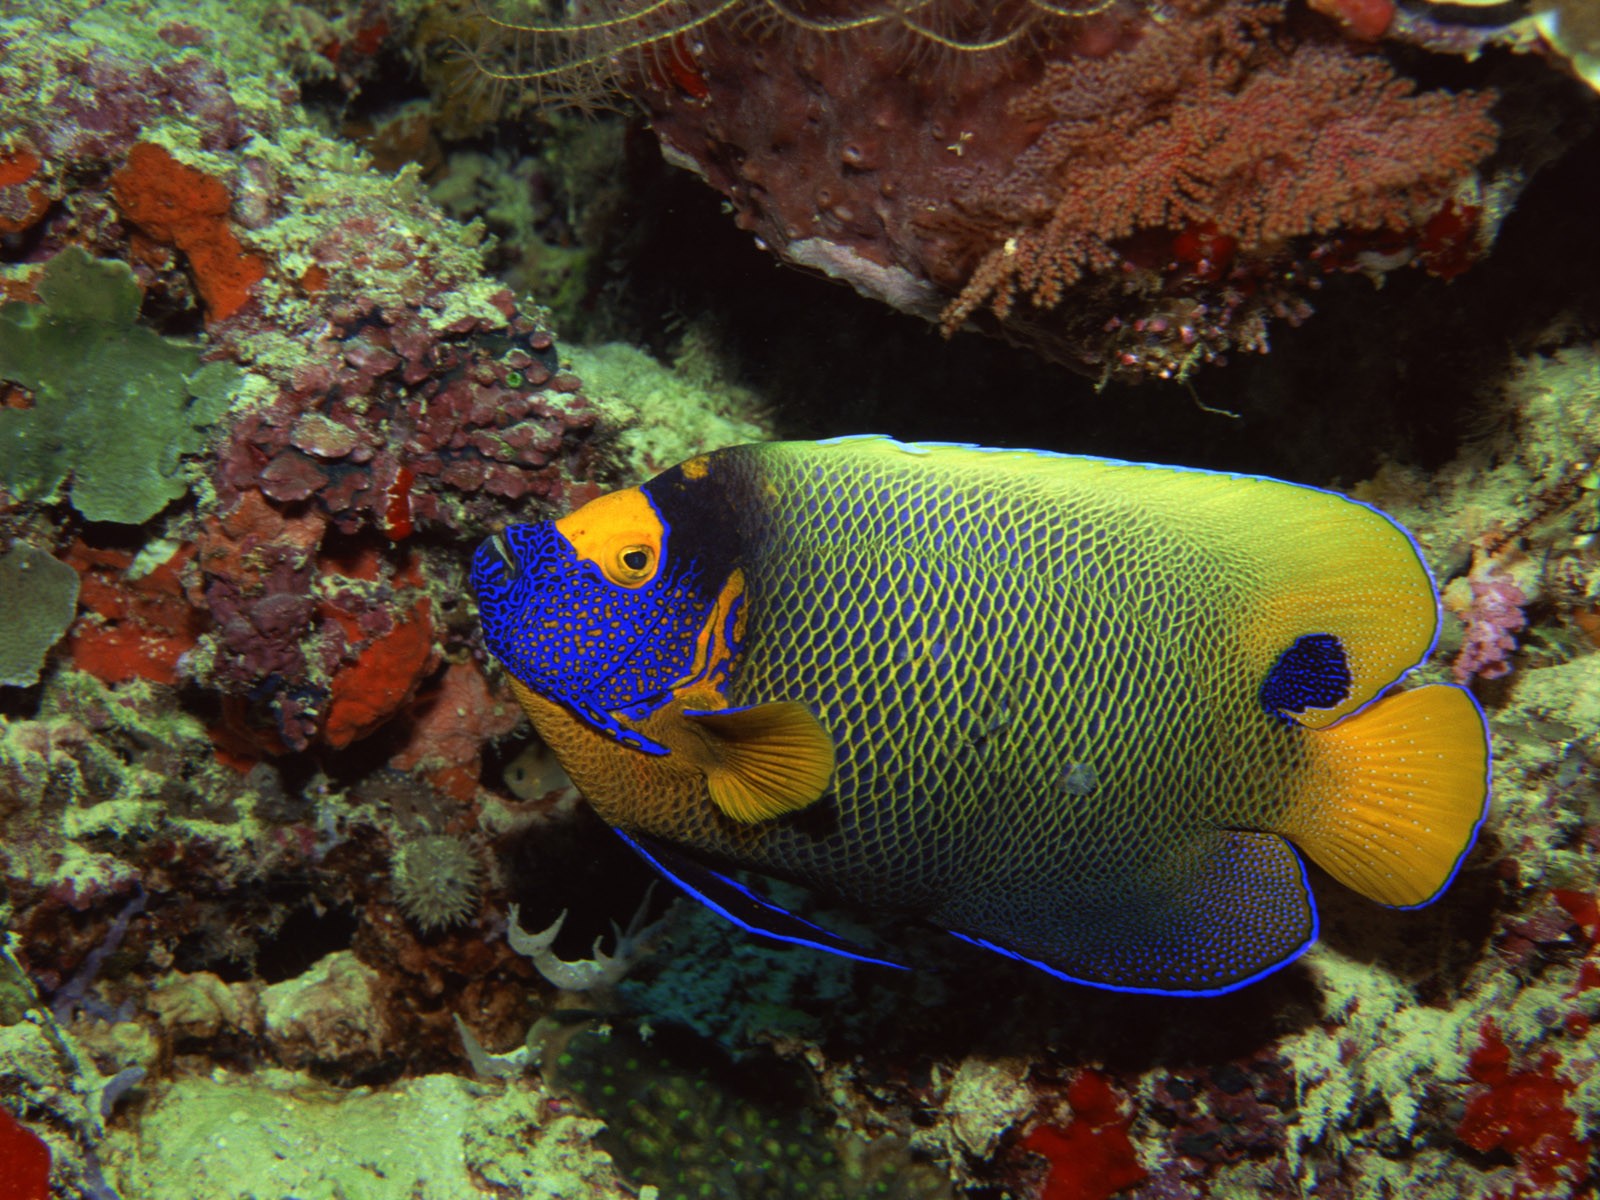 General 1600x1200 underwater sea fish colorful animals